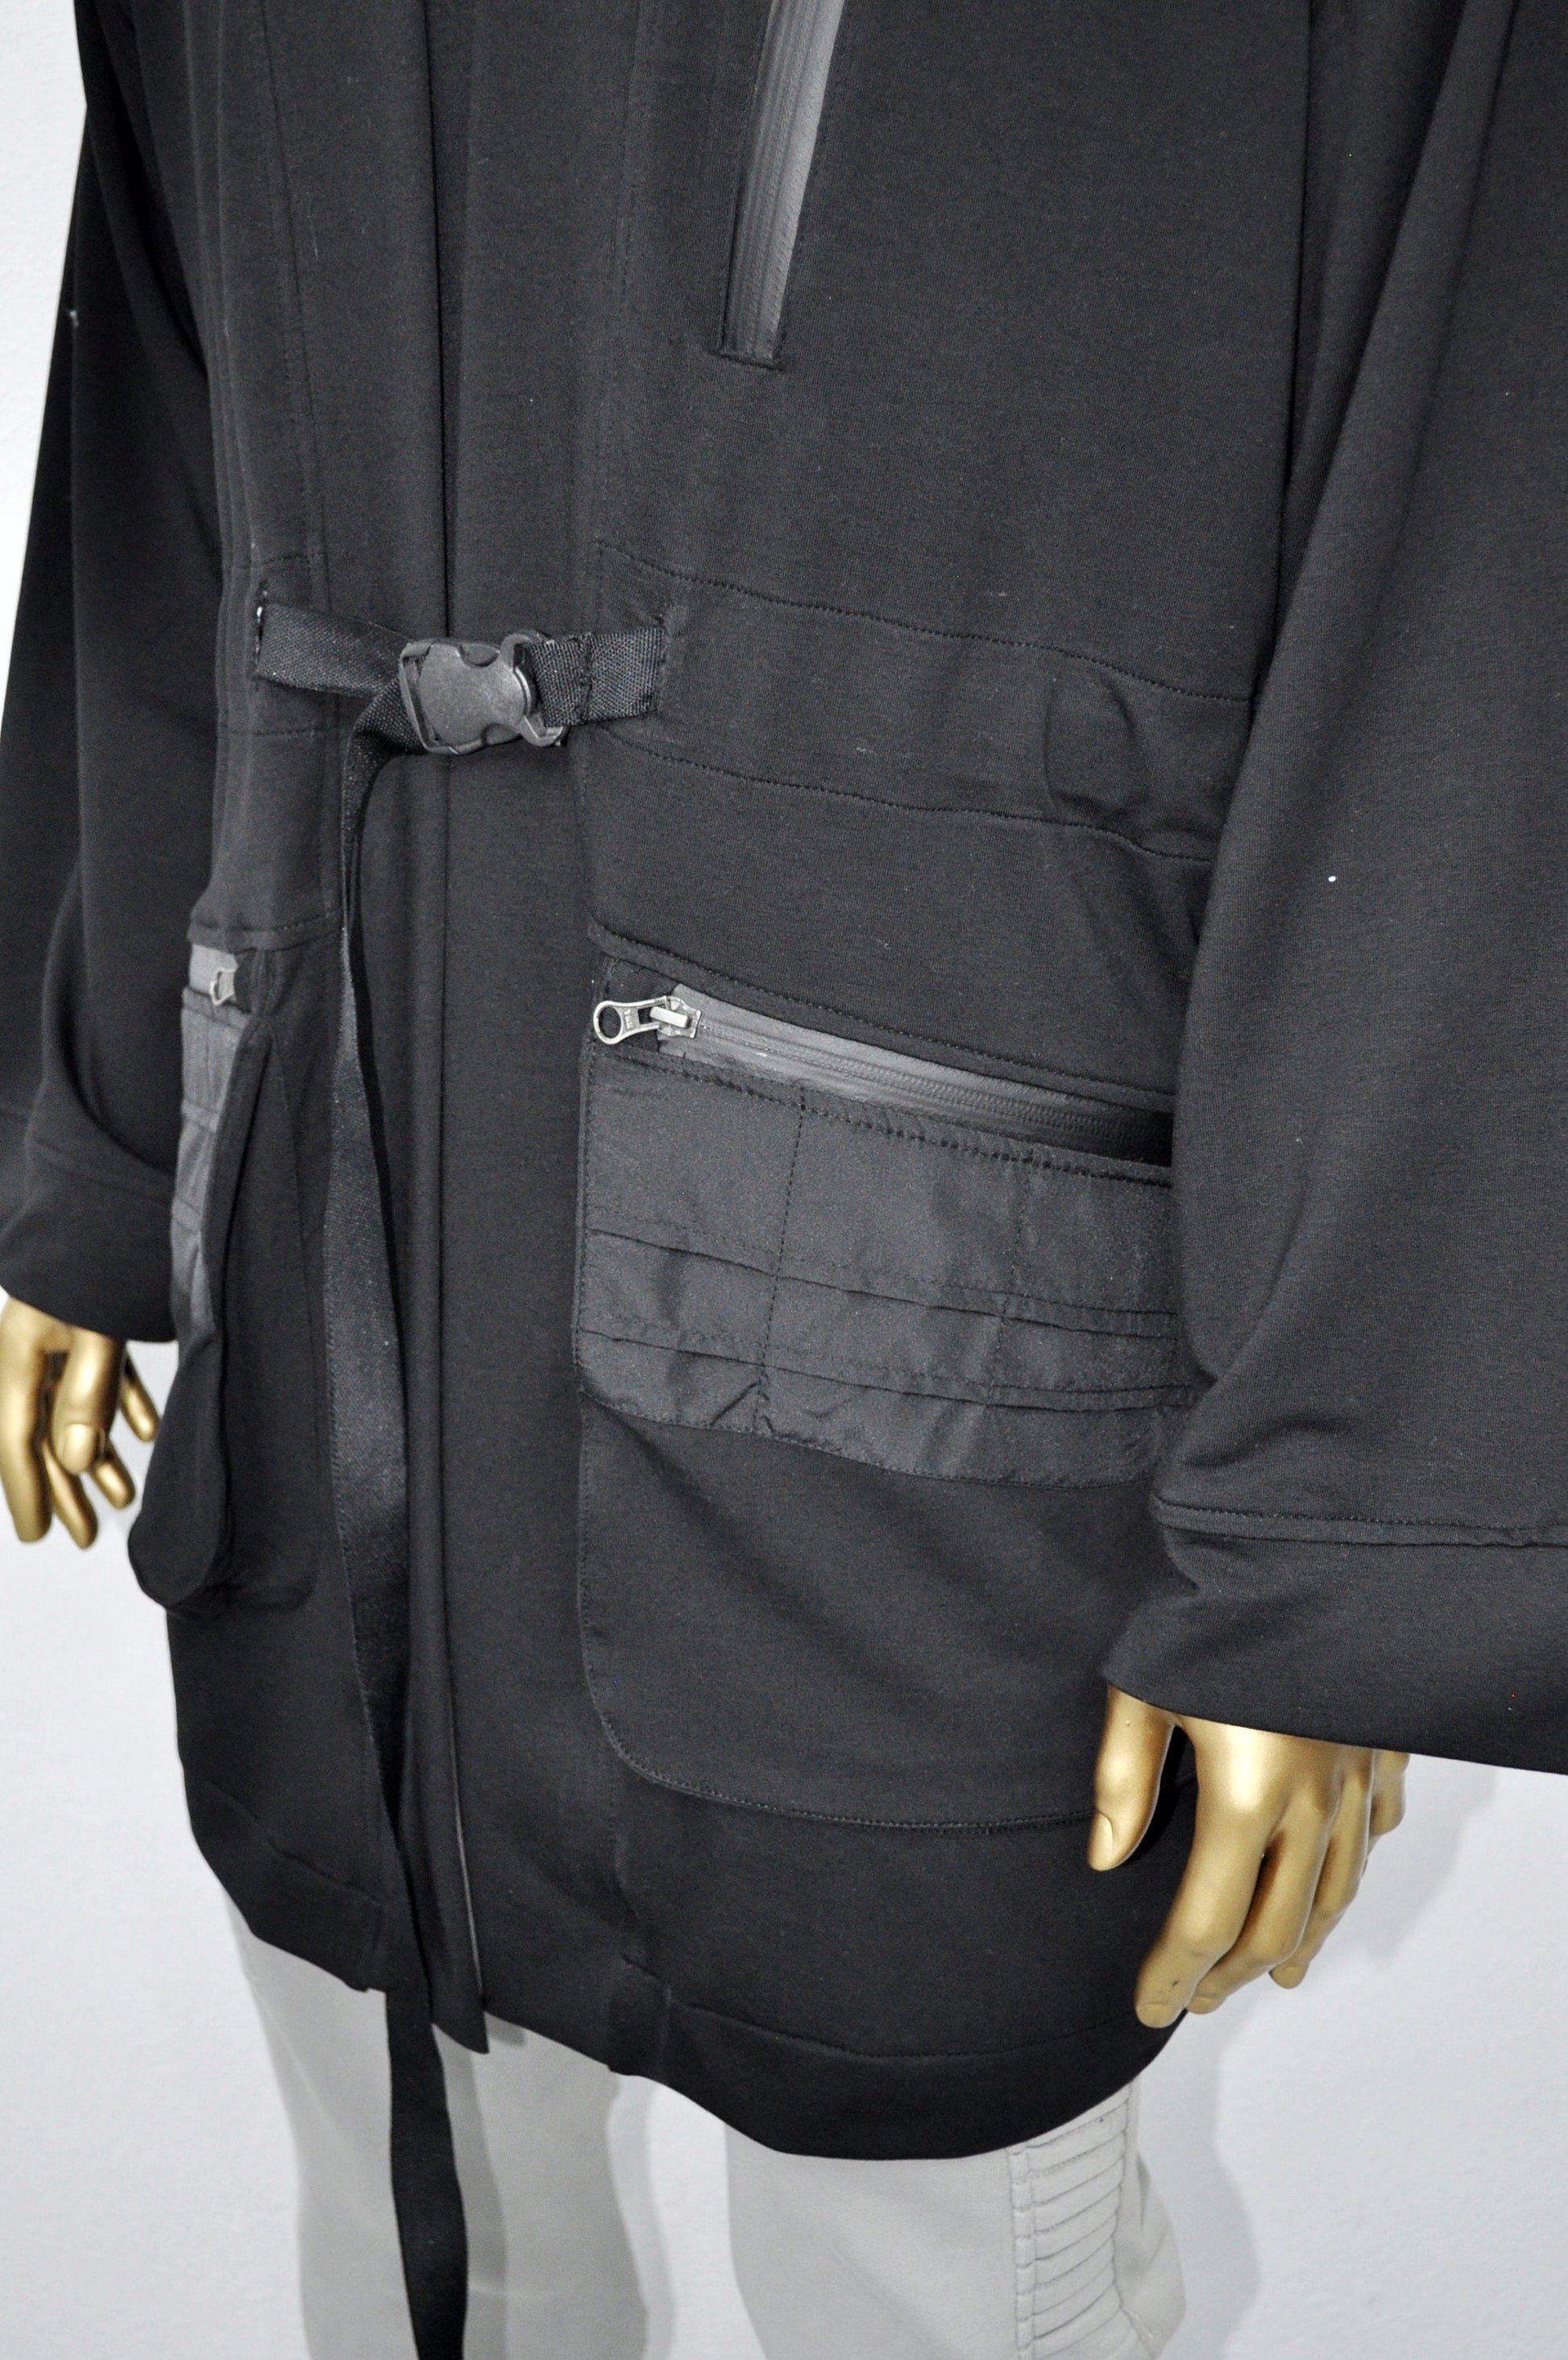 XS-8XL Functional Japanese Kimono Cardigan for Men JACKET,Techwear,Dark Wind Ninja Robe,Essentials Black Design 3/4 Sleeve,Futuristic-BB0158